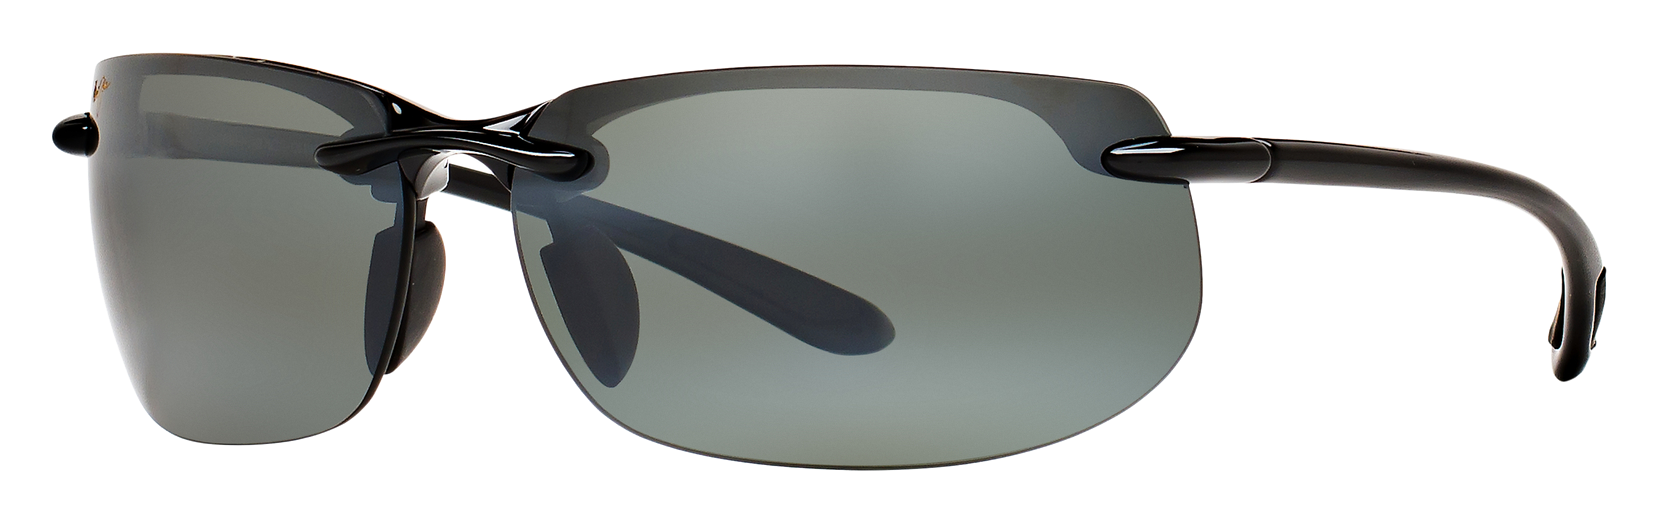 Maui Jim Banyans Sunglasses Gloss Black